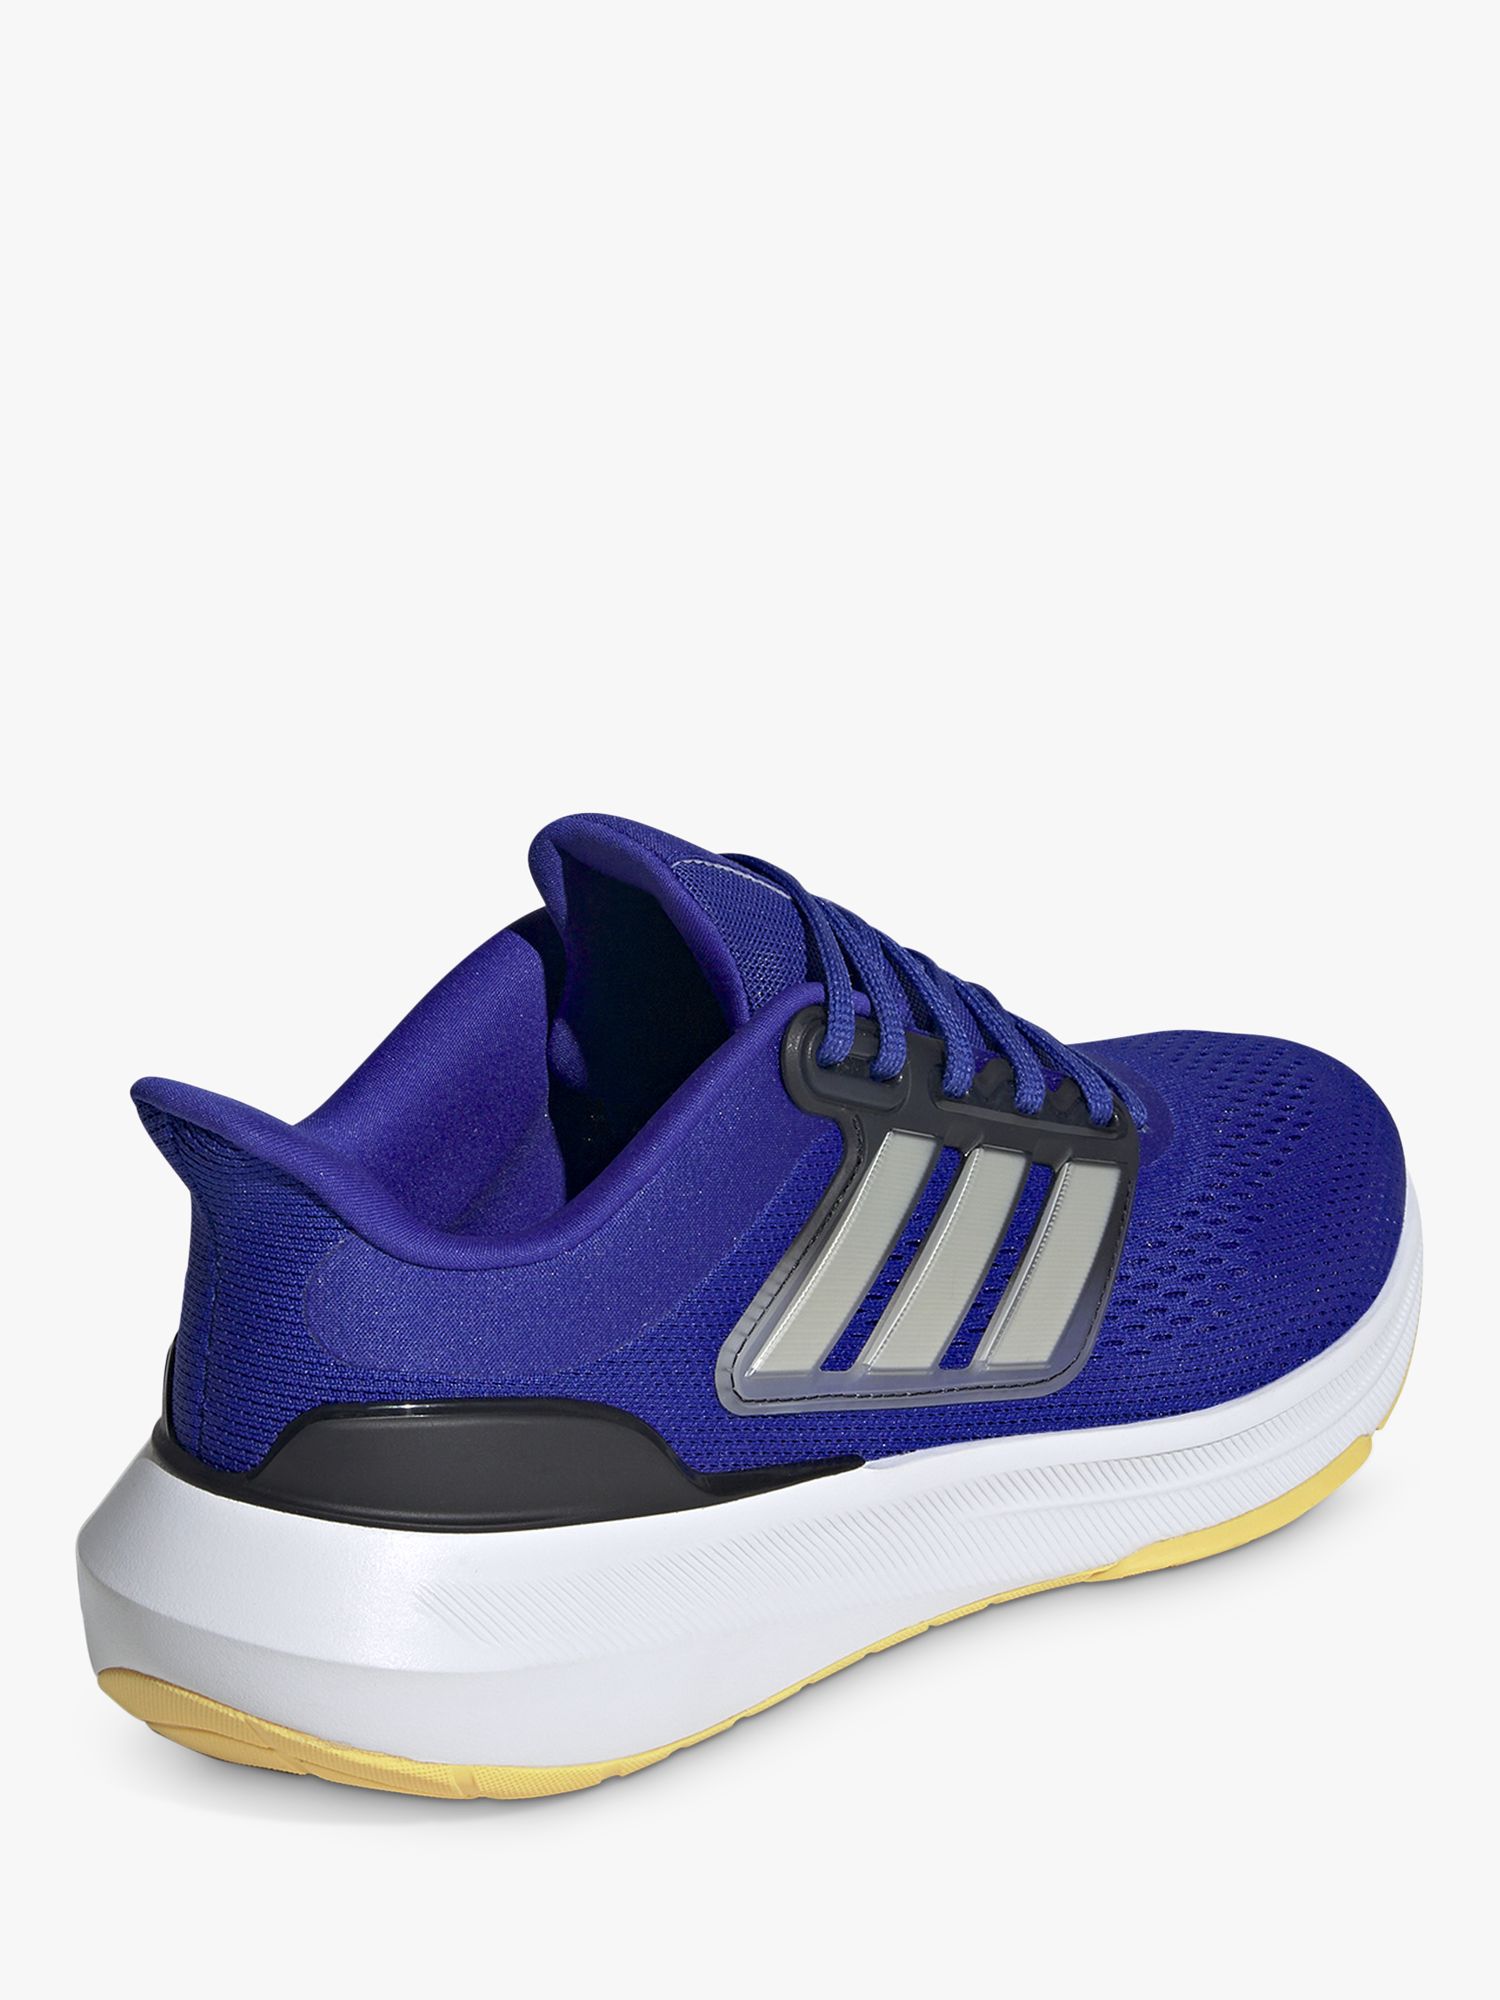 adidas Ultrabounce Men's Running Shoes, Lucid Blue/Grey, 7.5